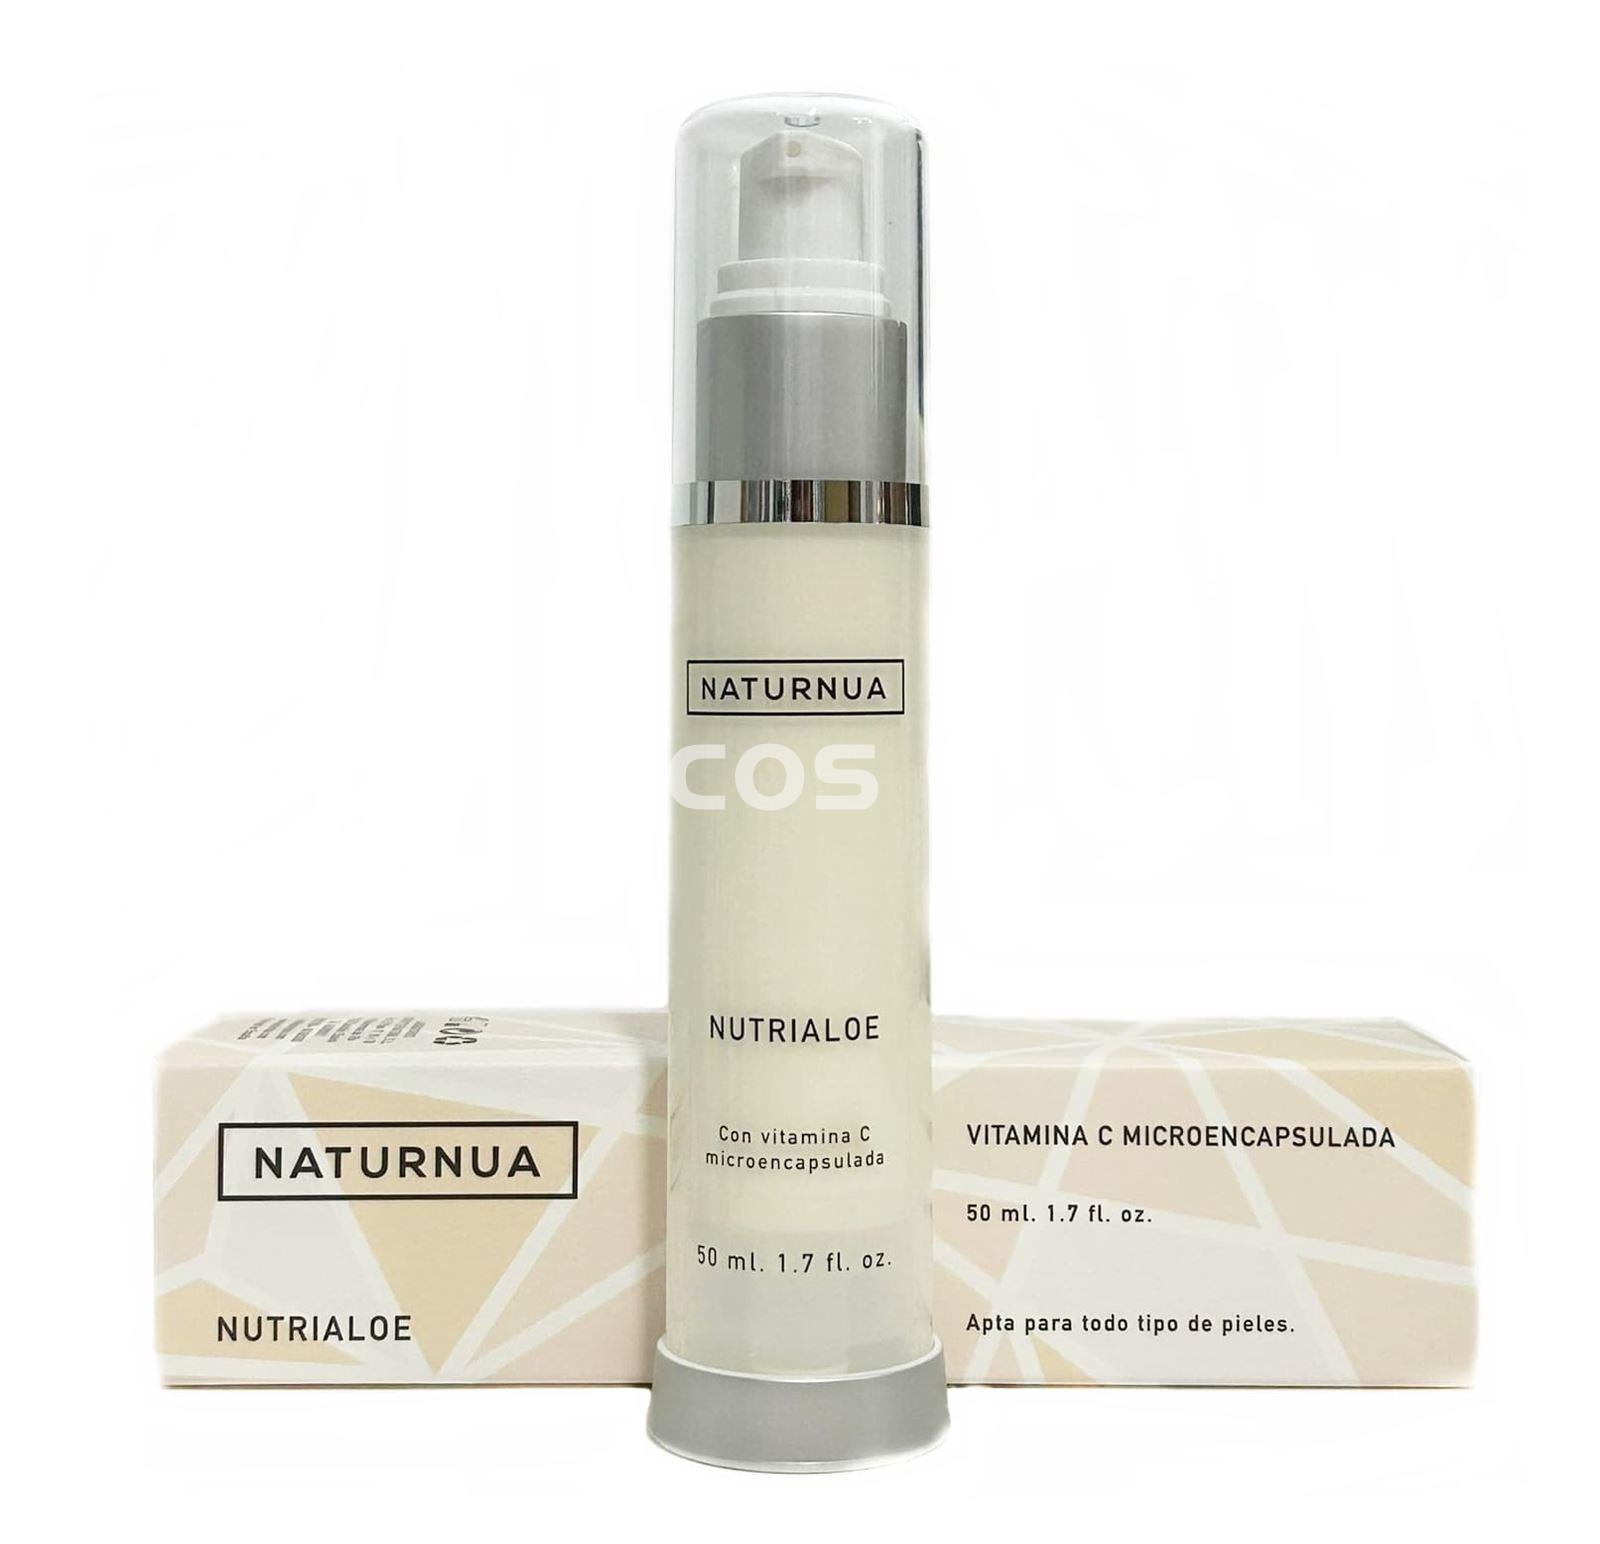 Naturnua Crema Facial Nutrialoe con Vitamina C - Imagen 1